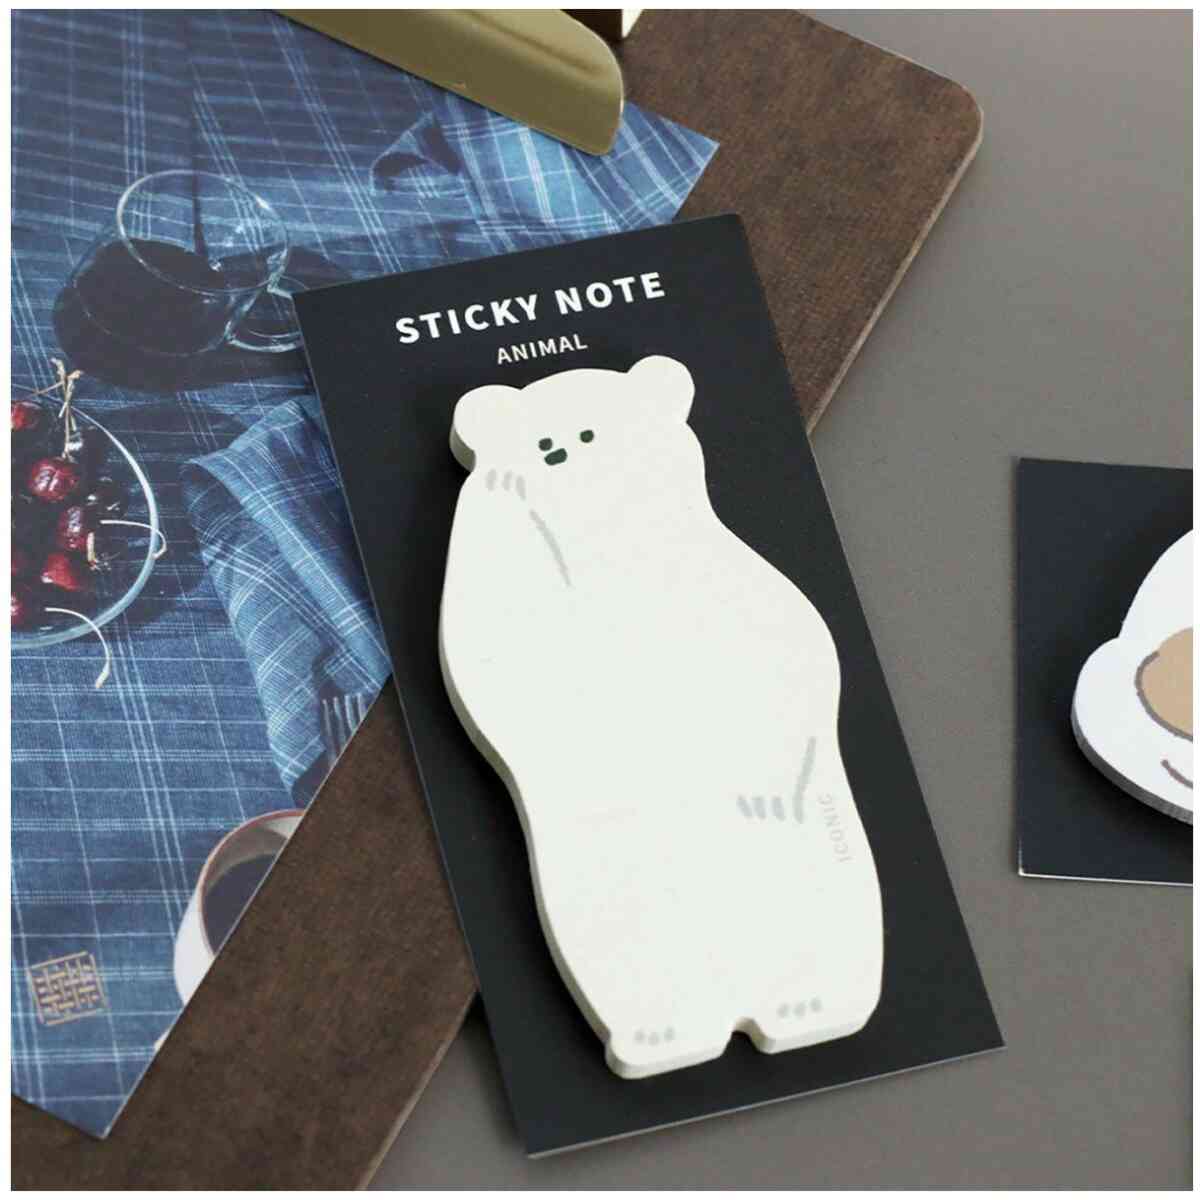 sticky note animal white bear